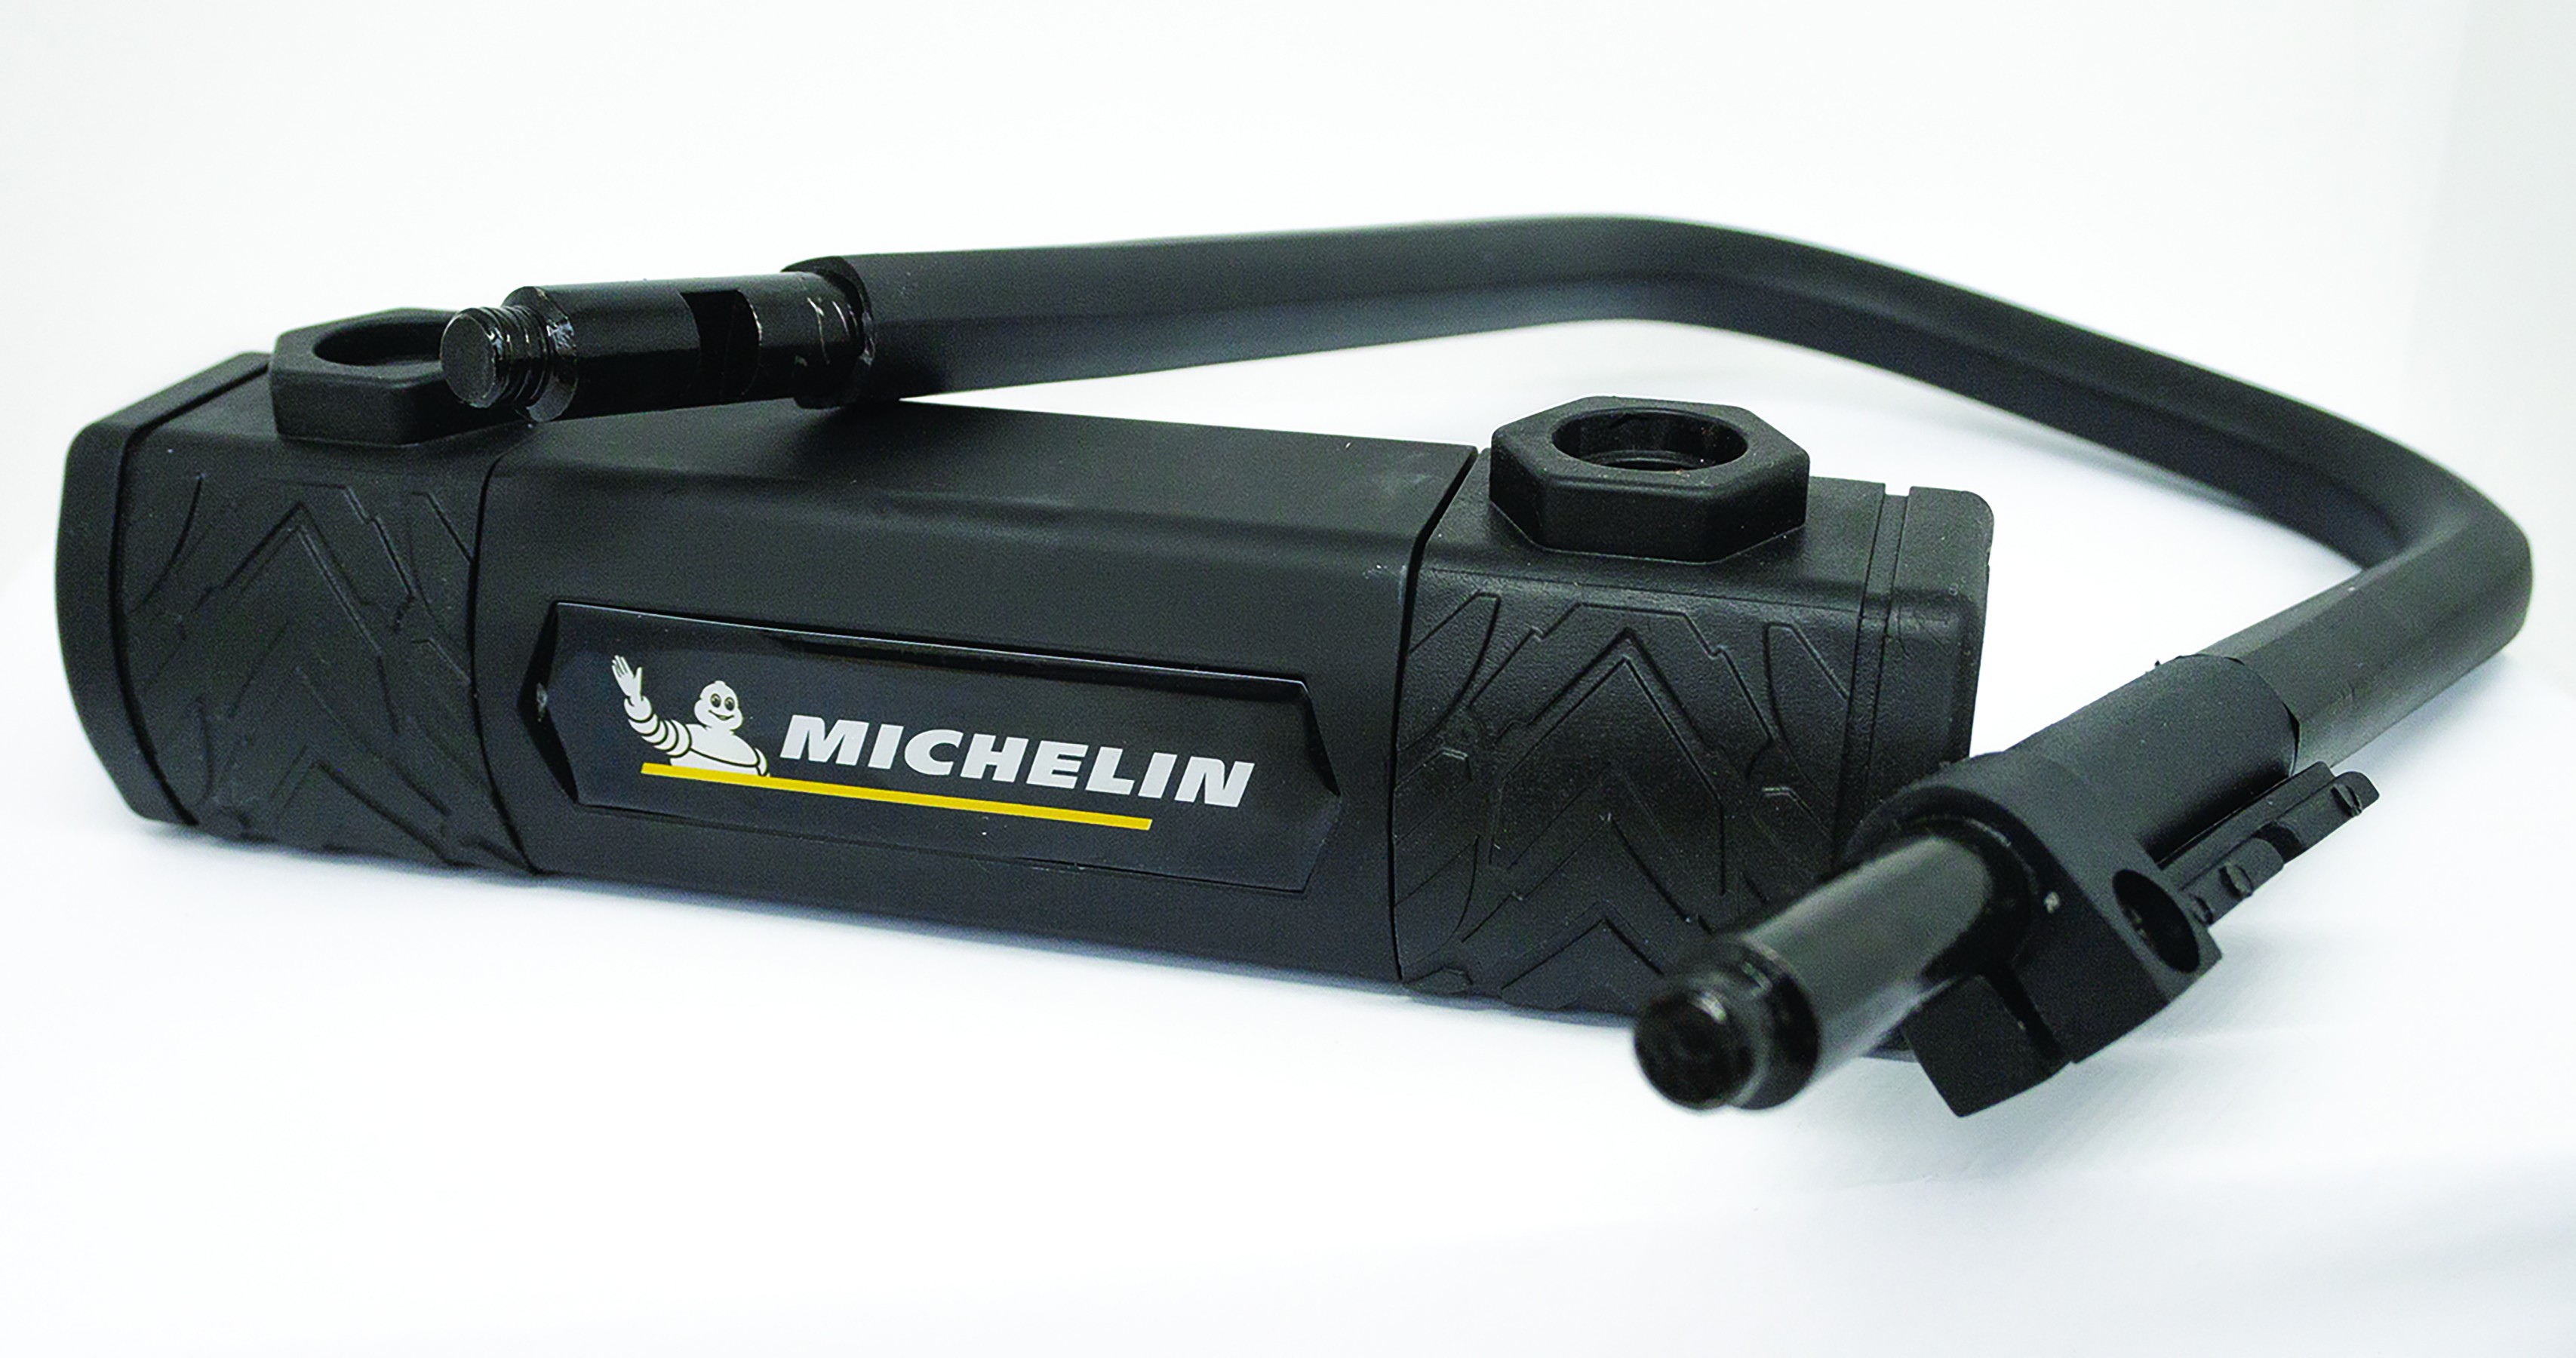 Michelin ANTIVOL VELO U 105 x 245mm NOIR AVEC SUPPORT FIXATION AU CADRE